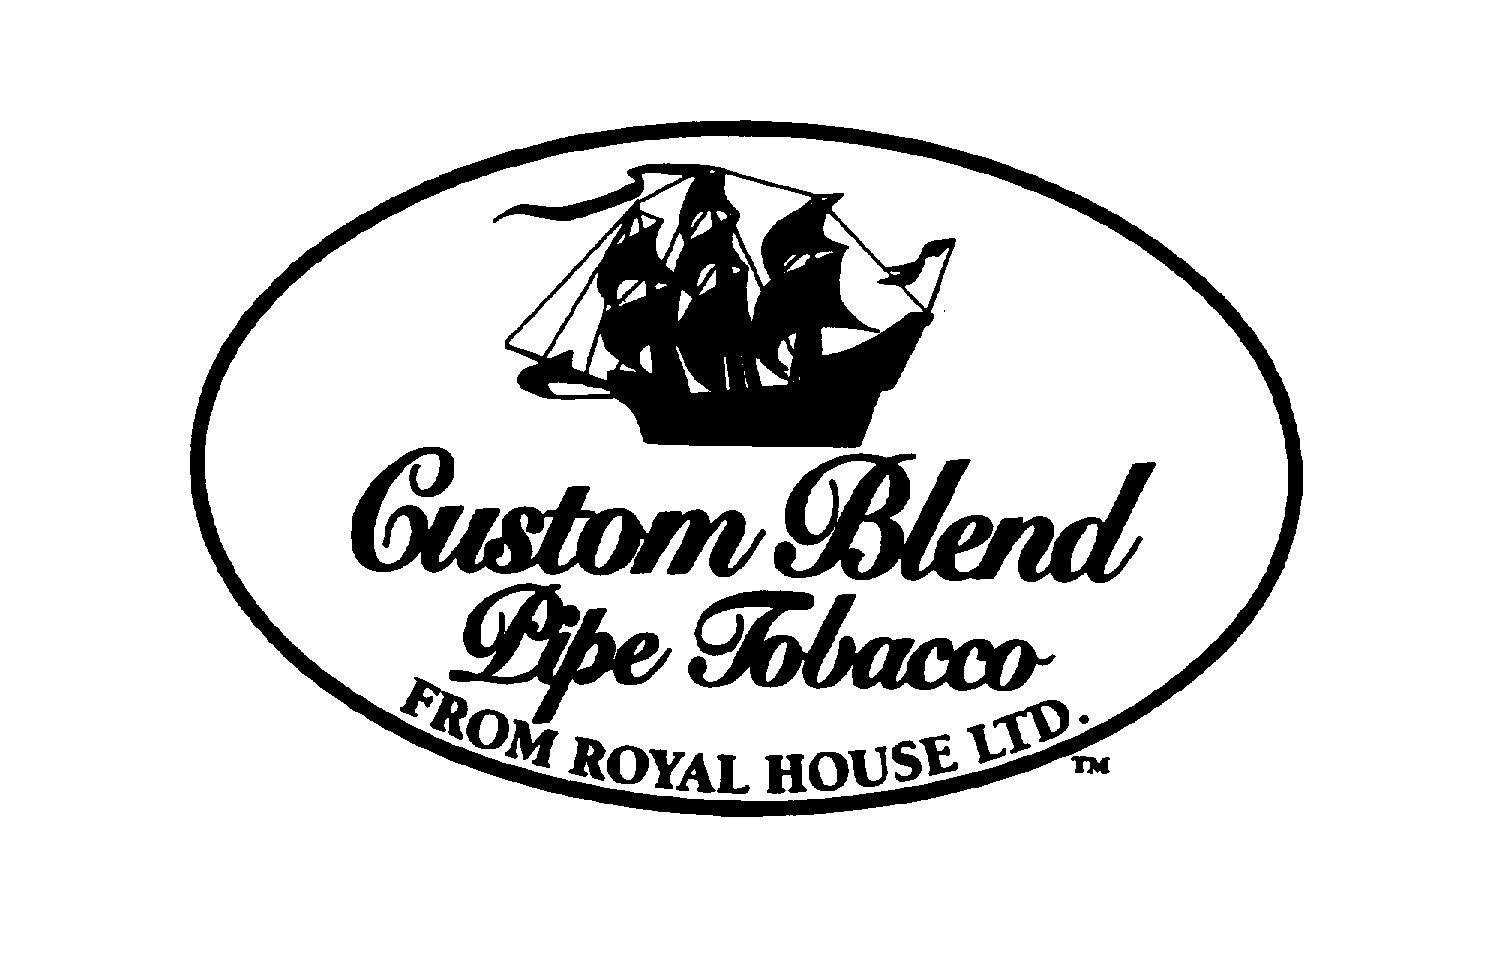  CUSTOM BLEND PIPE TOBACCO FROM ROYAL HOUSE LTD.